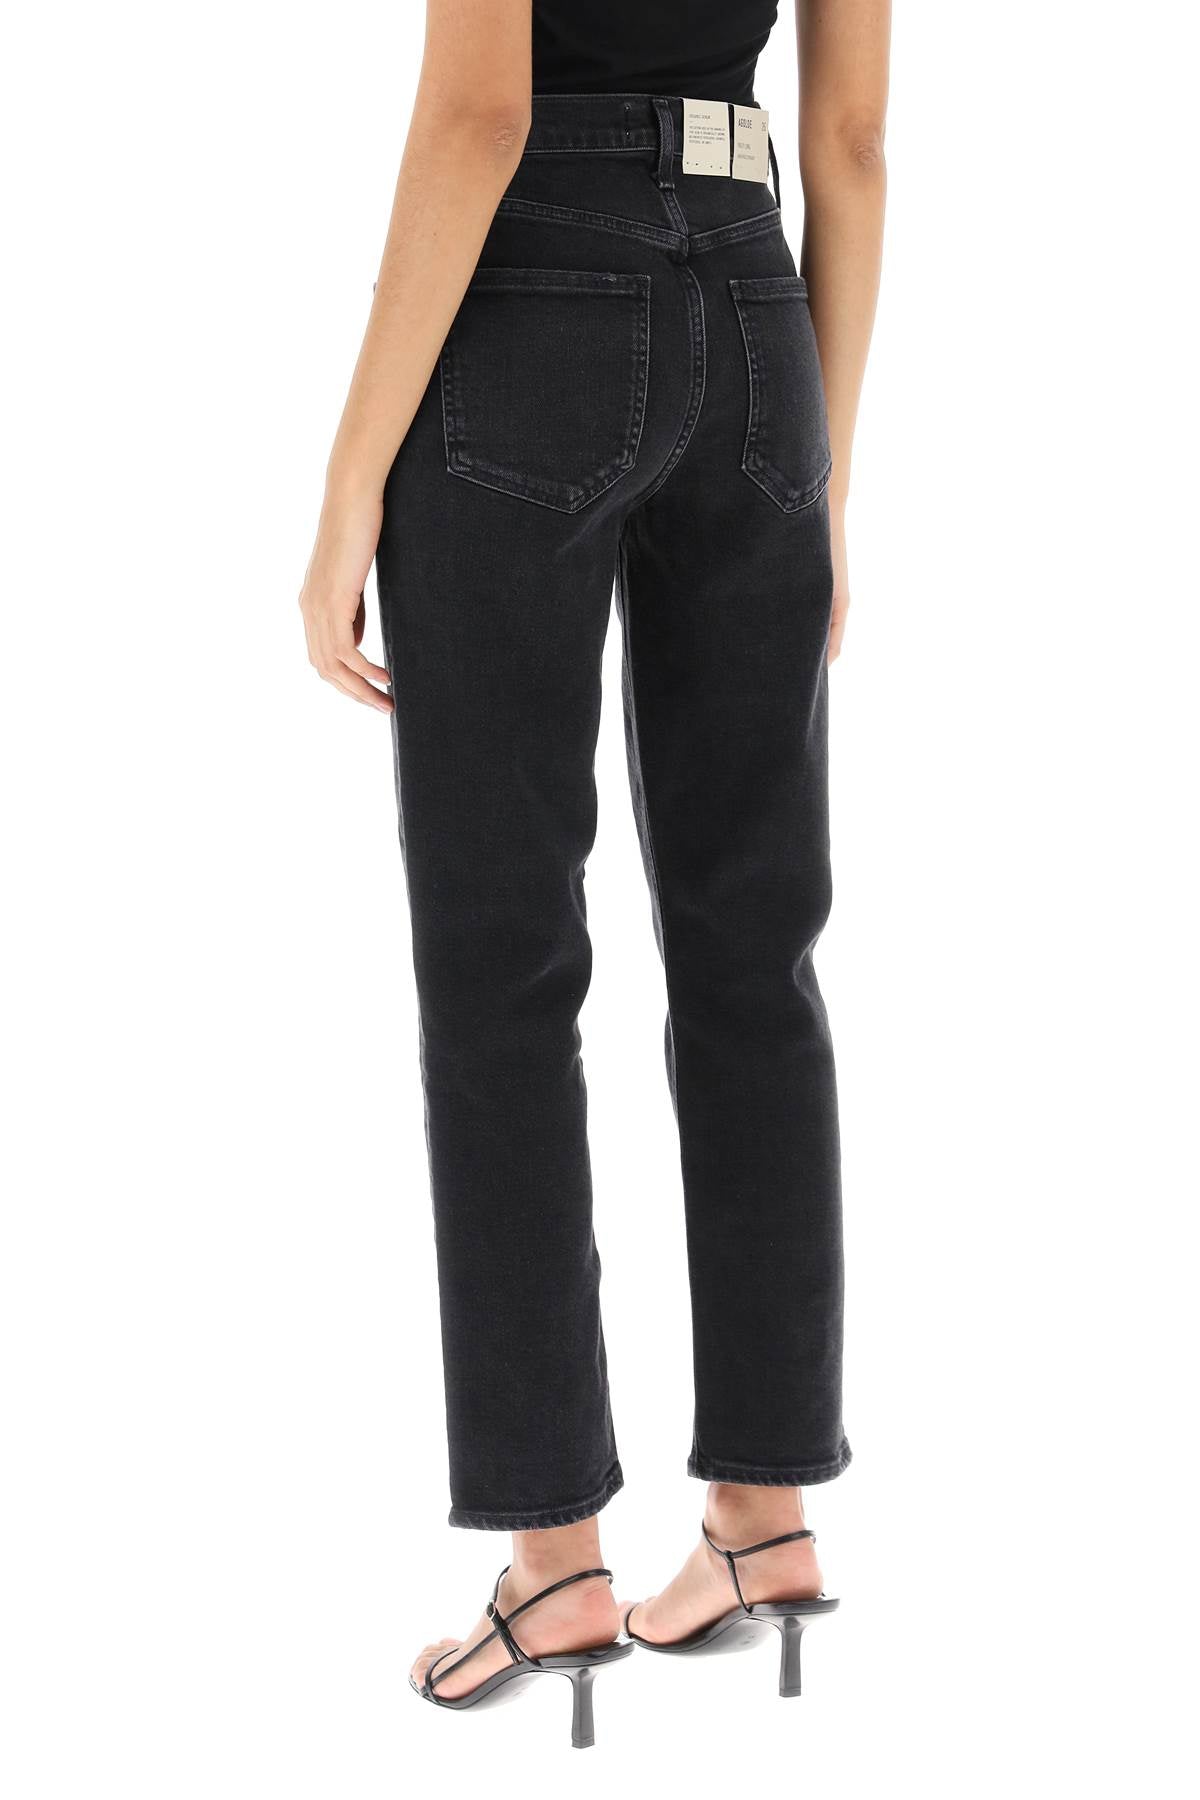 Agolde riley high-waisted jeans-2